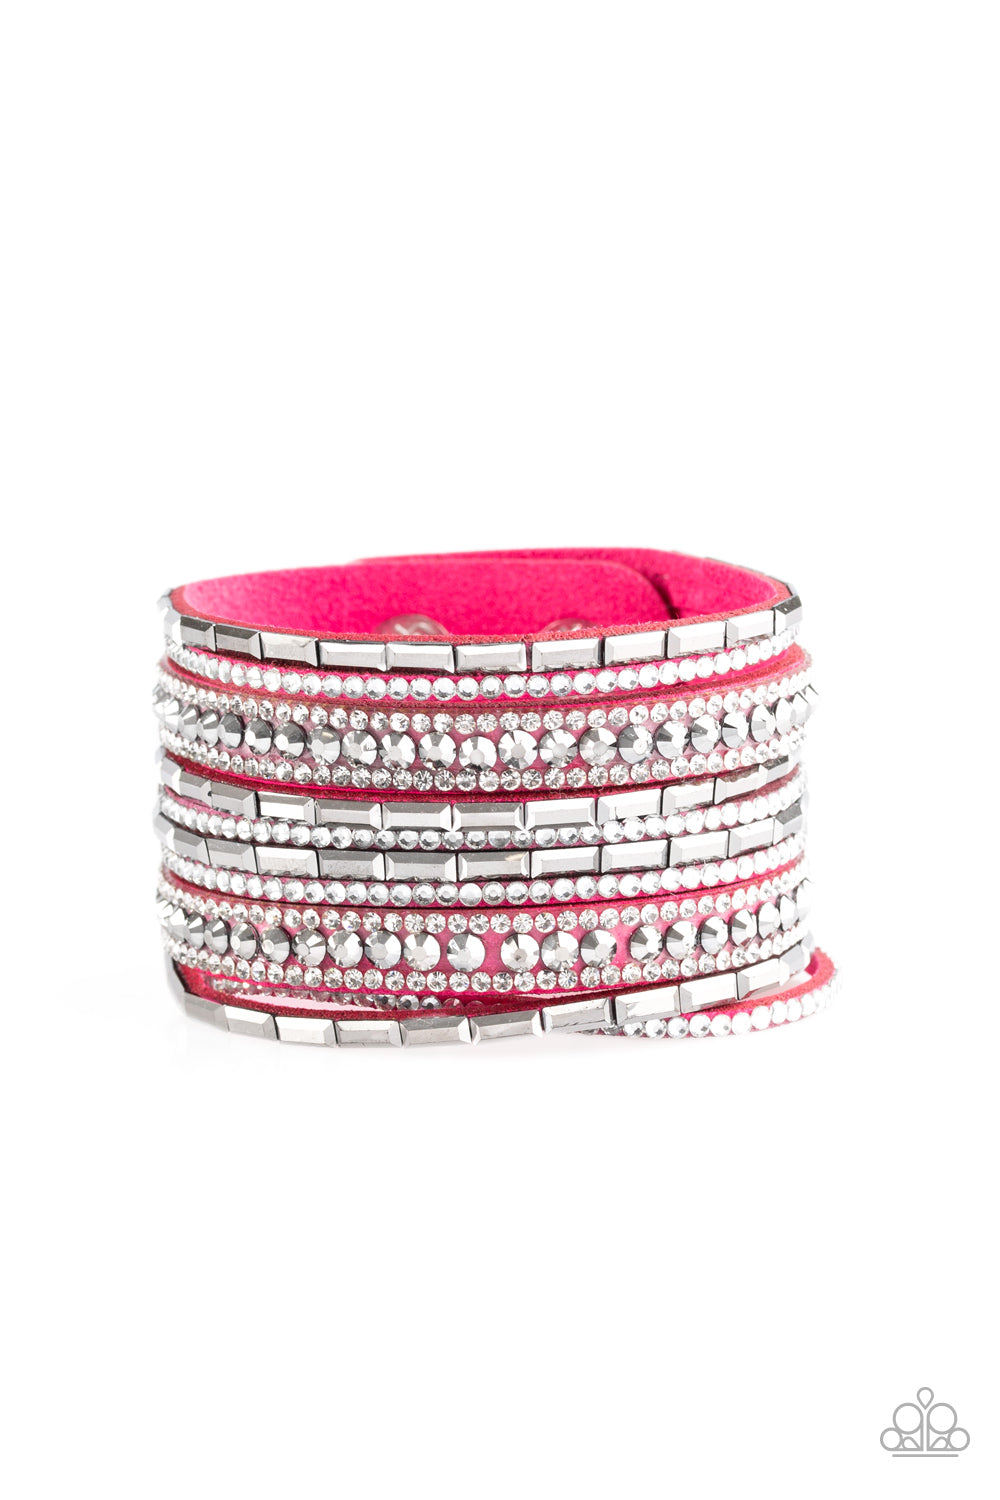 Wham Bam Glam - Pink Urban Bracelet